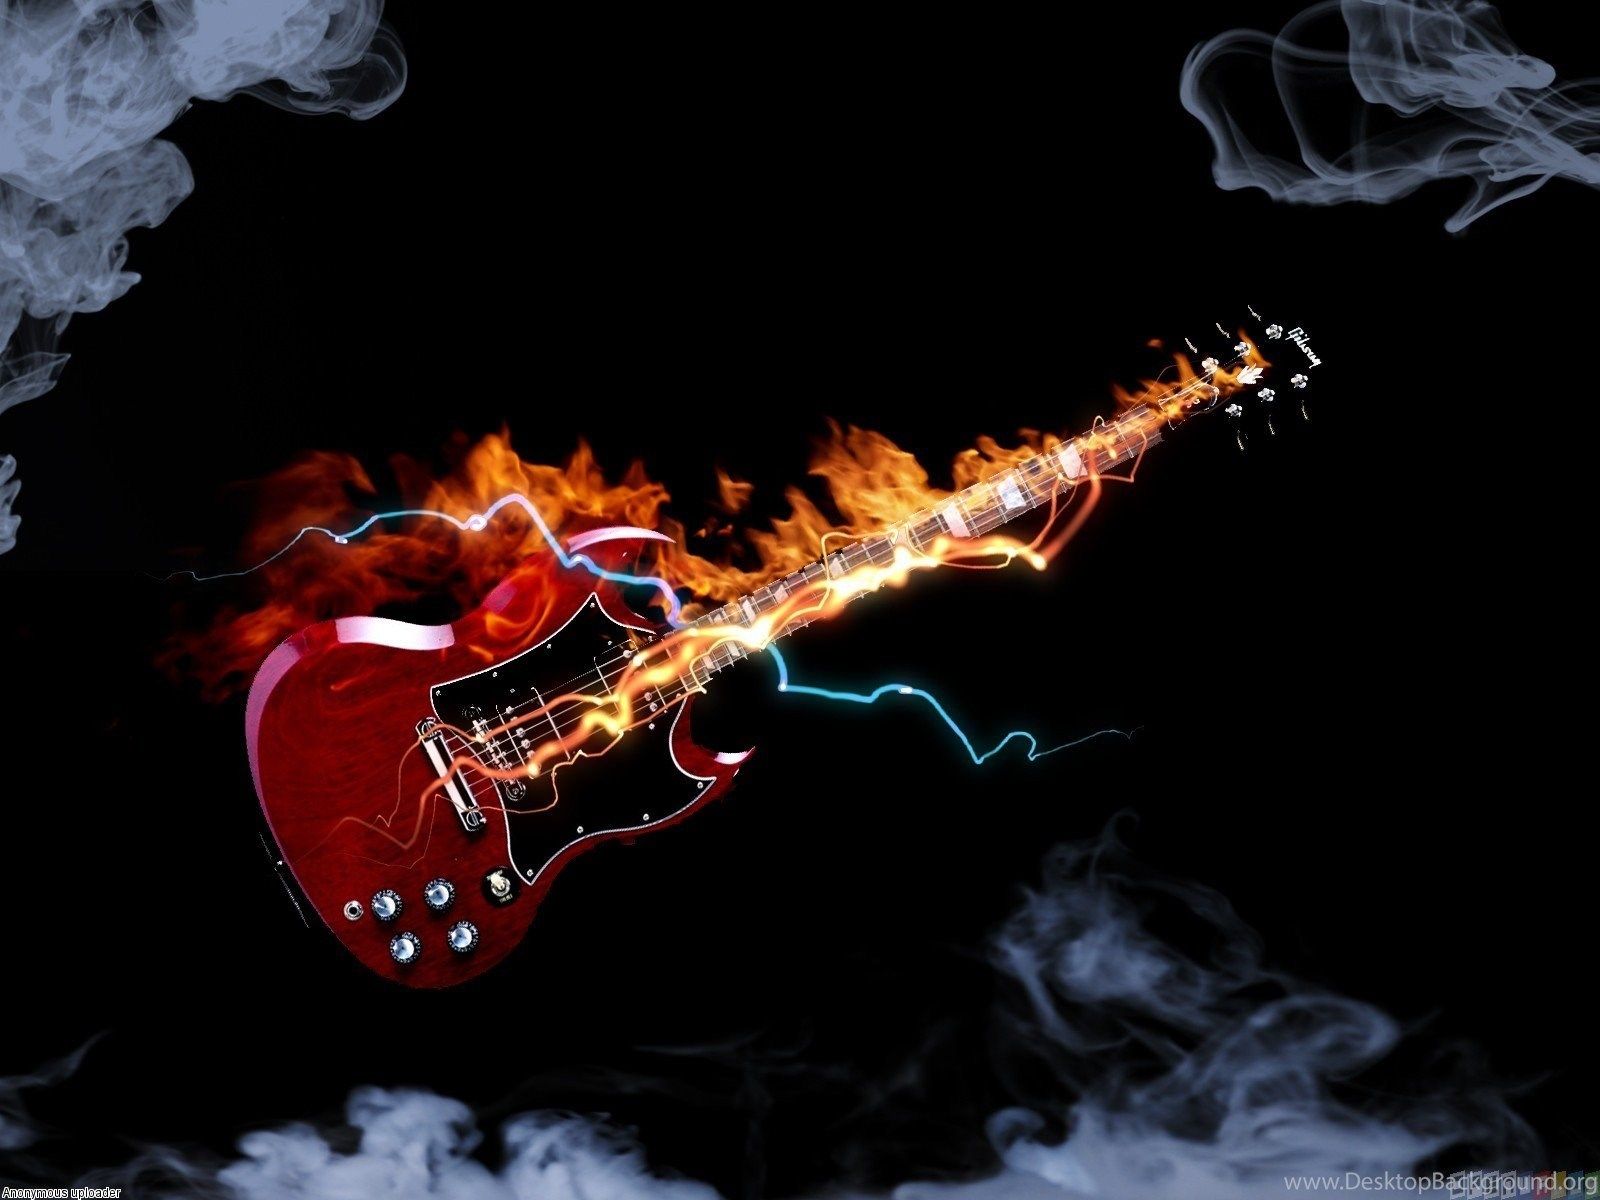 Guitar In Fire Wallpaper Desktop Background